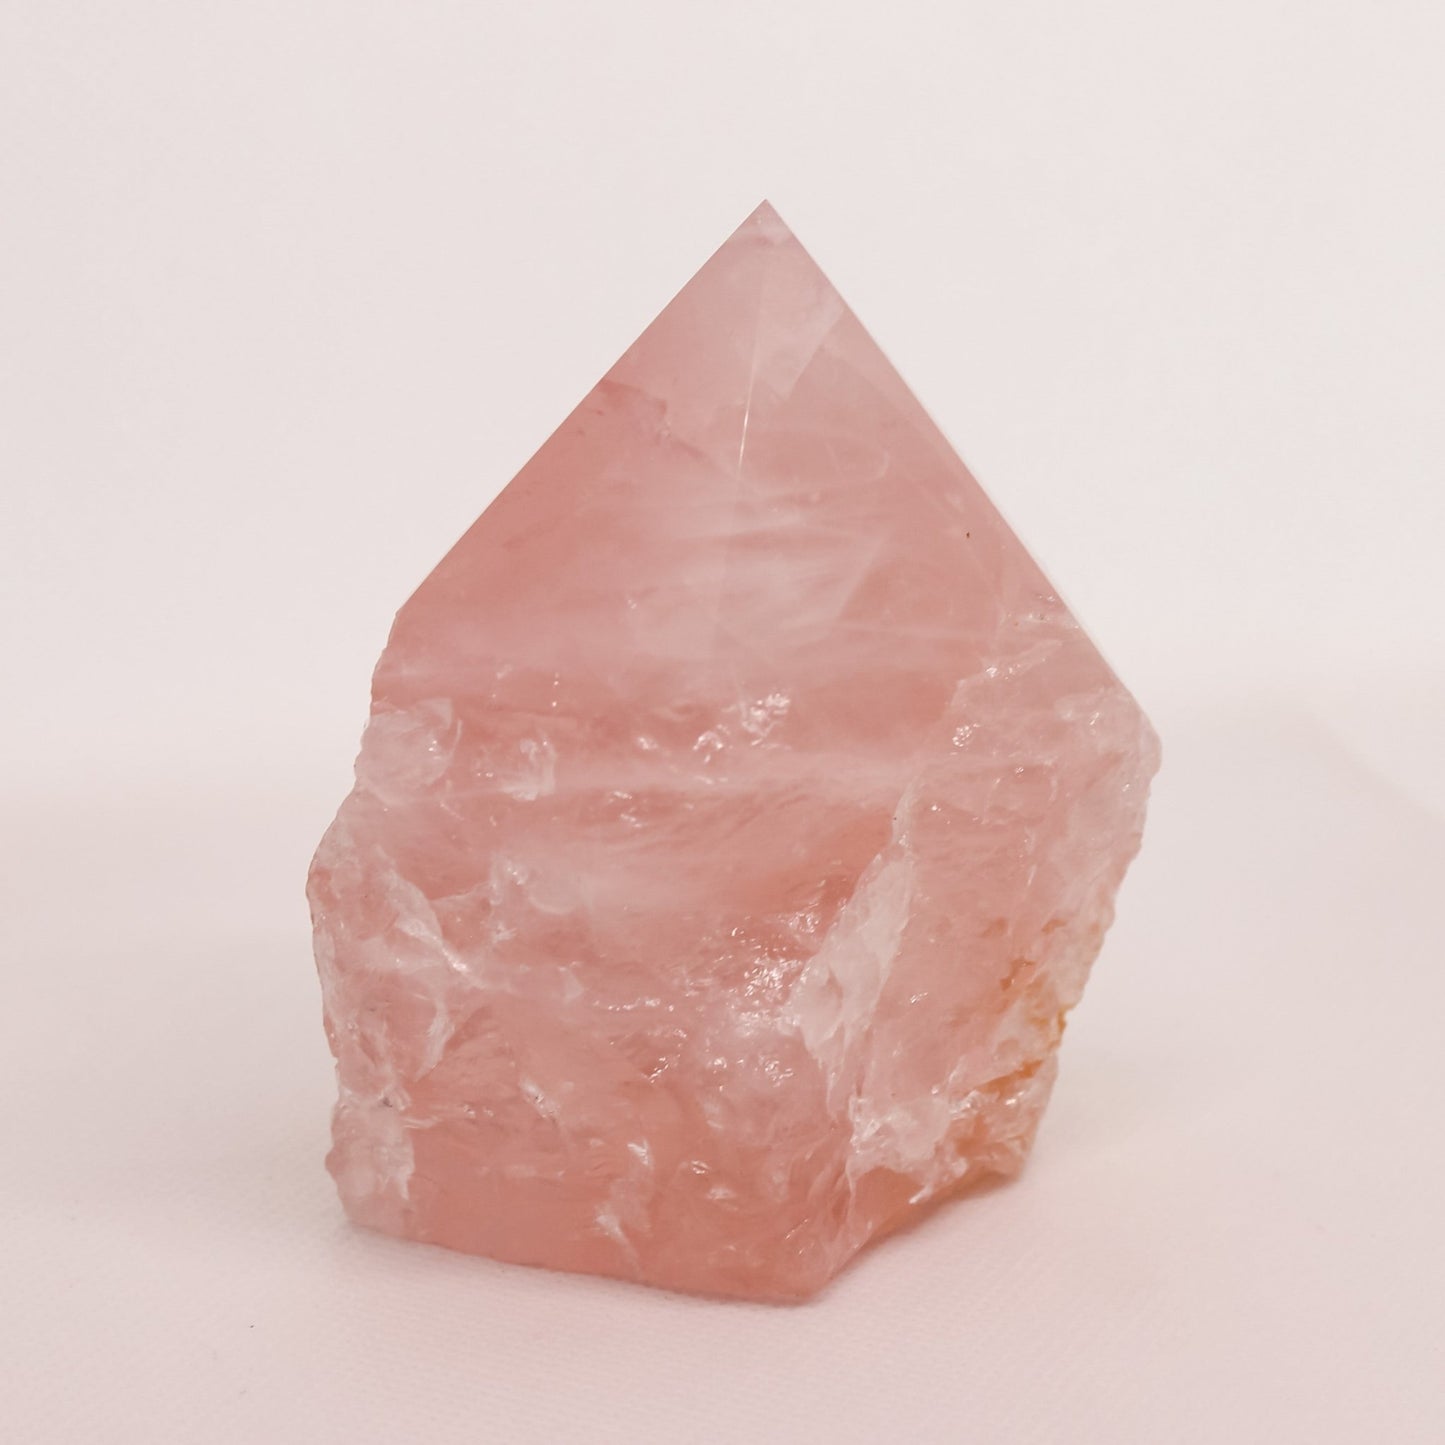 Rose Quartz Raw Tower - Conscious Crystals New Zealand Crystal and Spiritual Shop